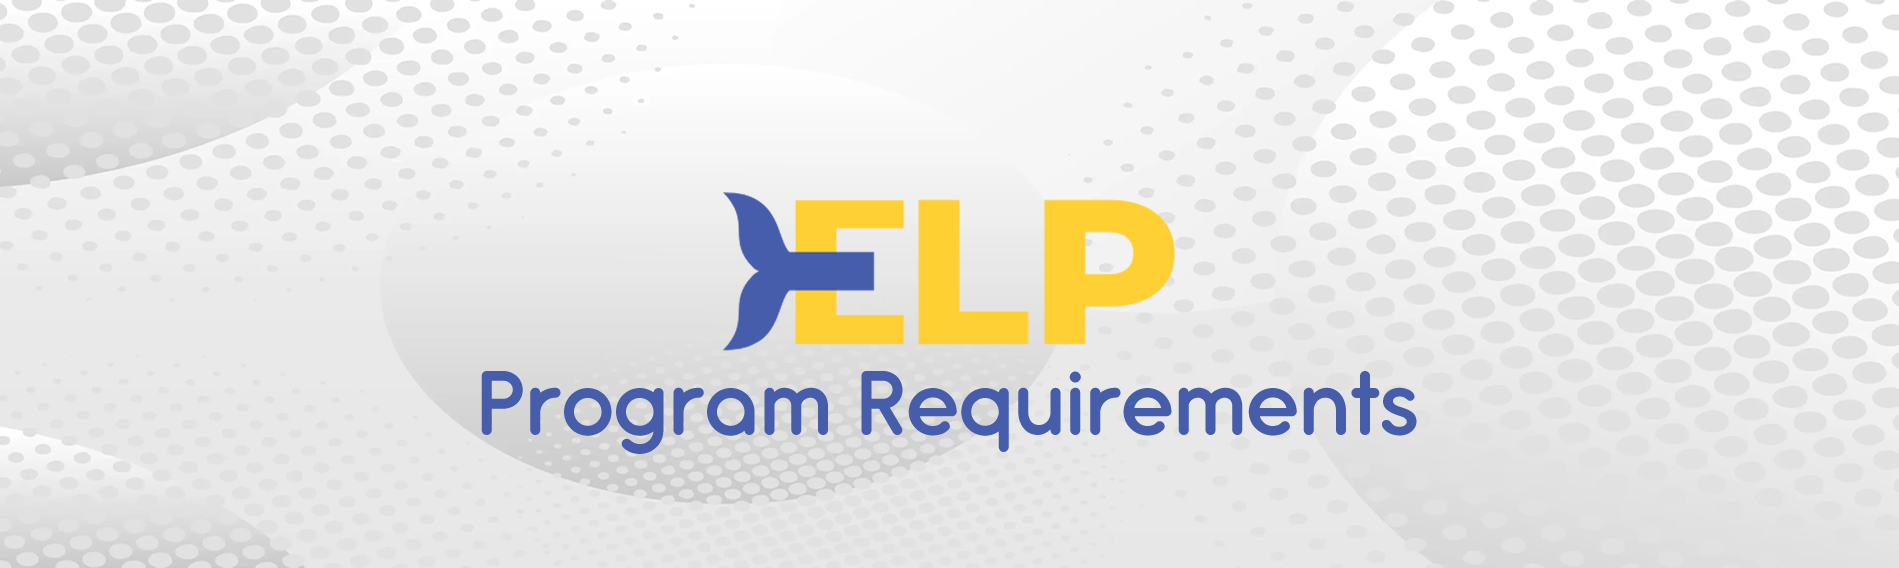 ELP Program Requirements Banner